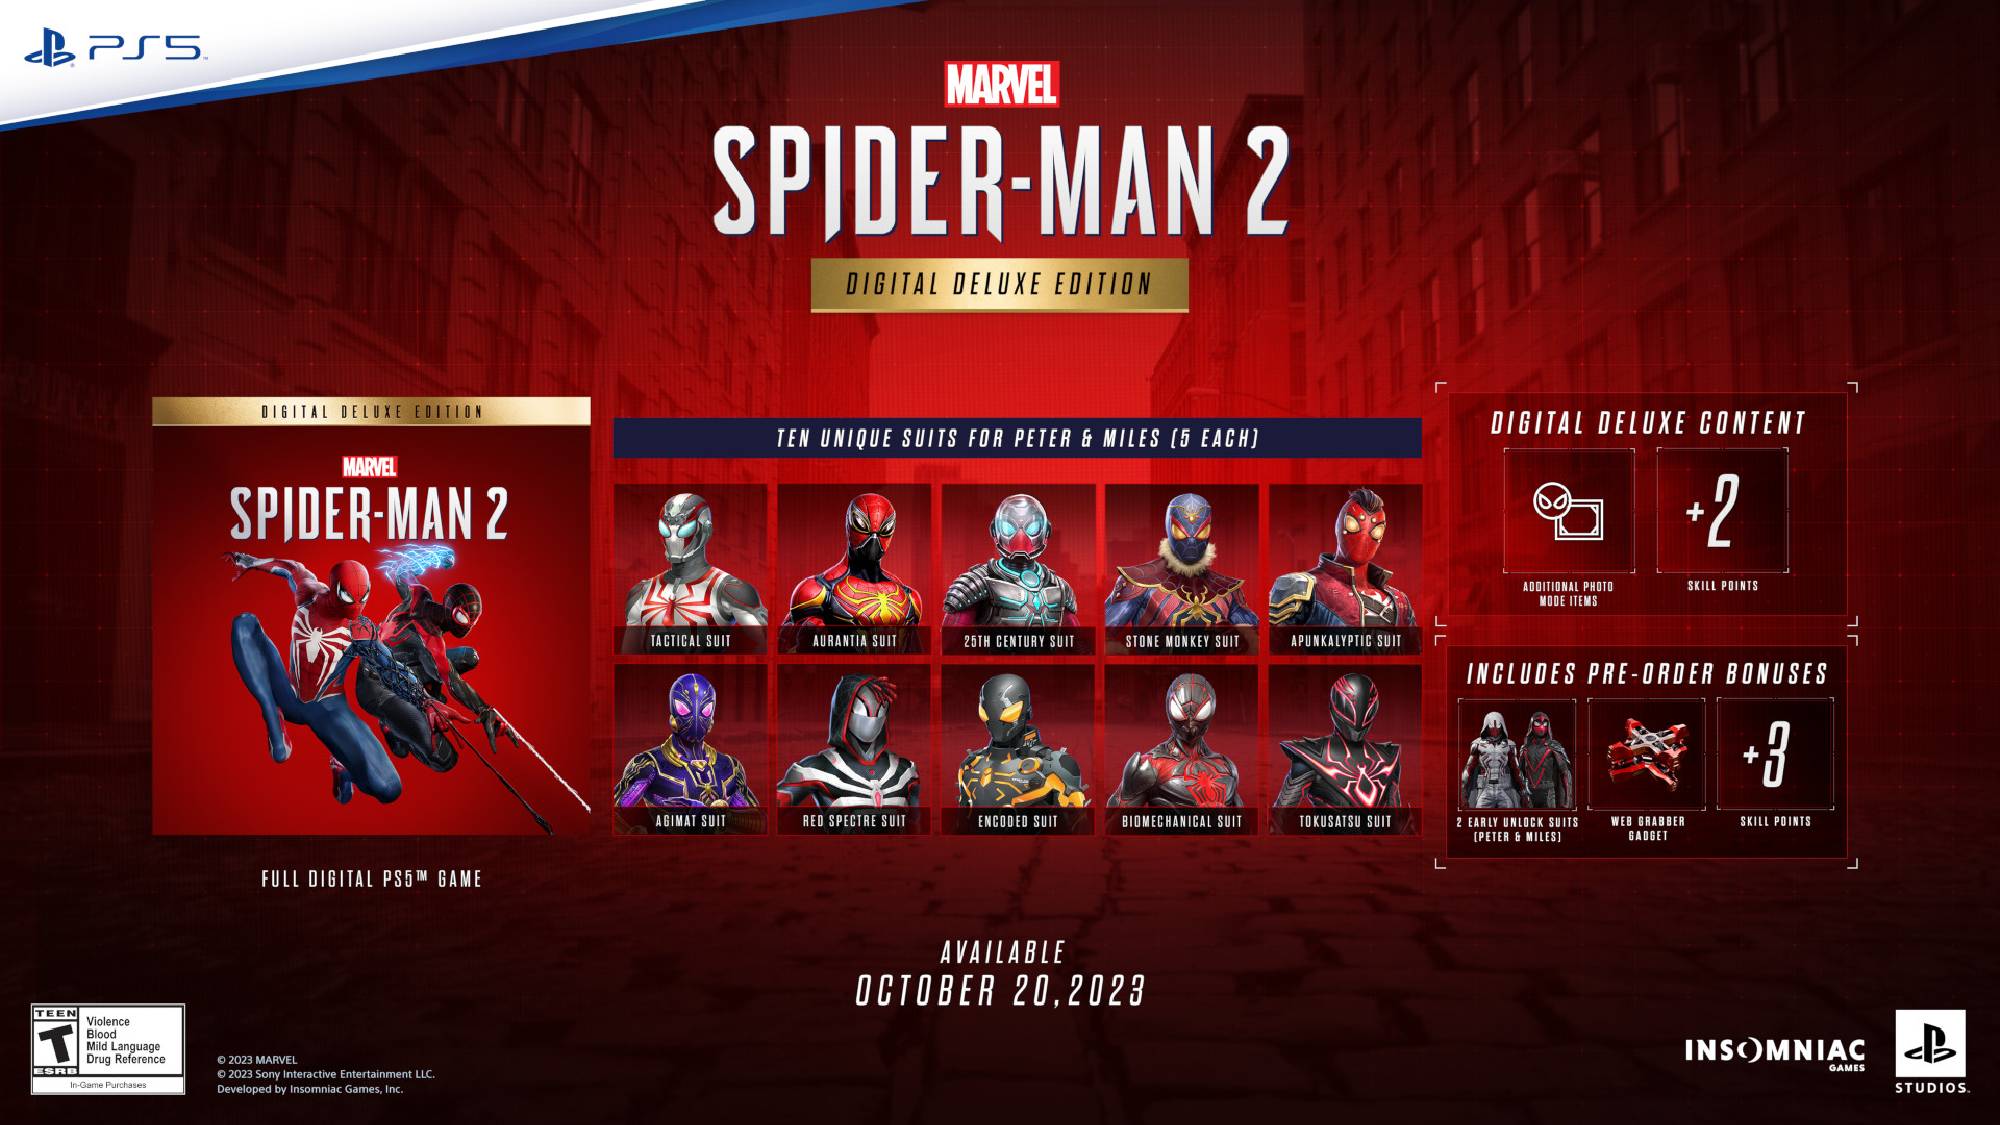 Detalles de Spider-Man 2 Digital Deluxe Edition